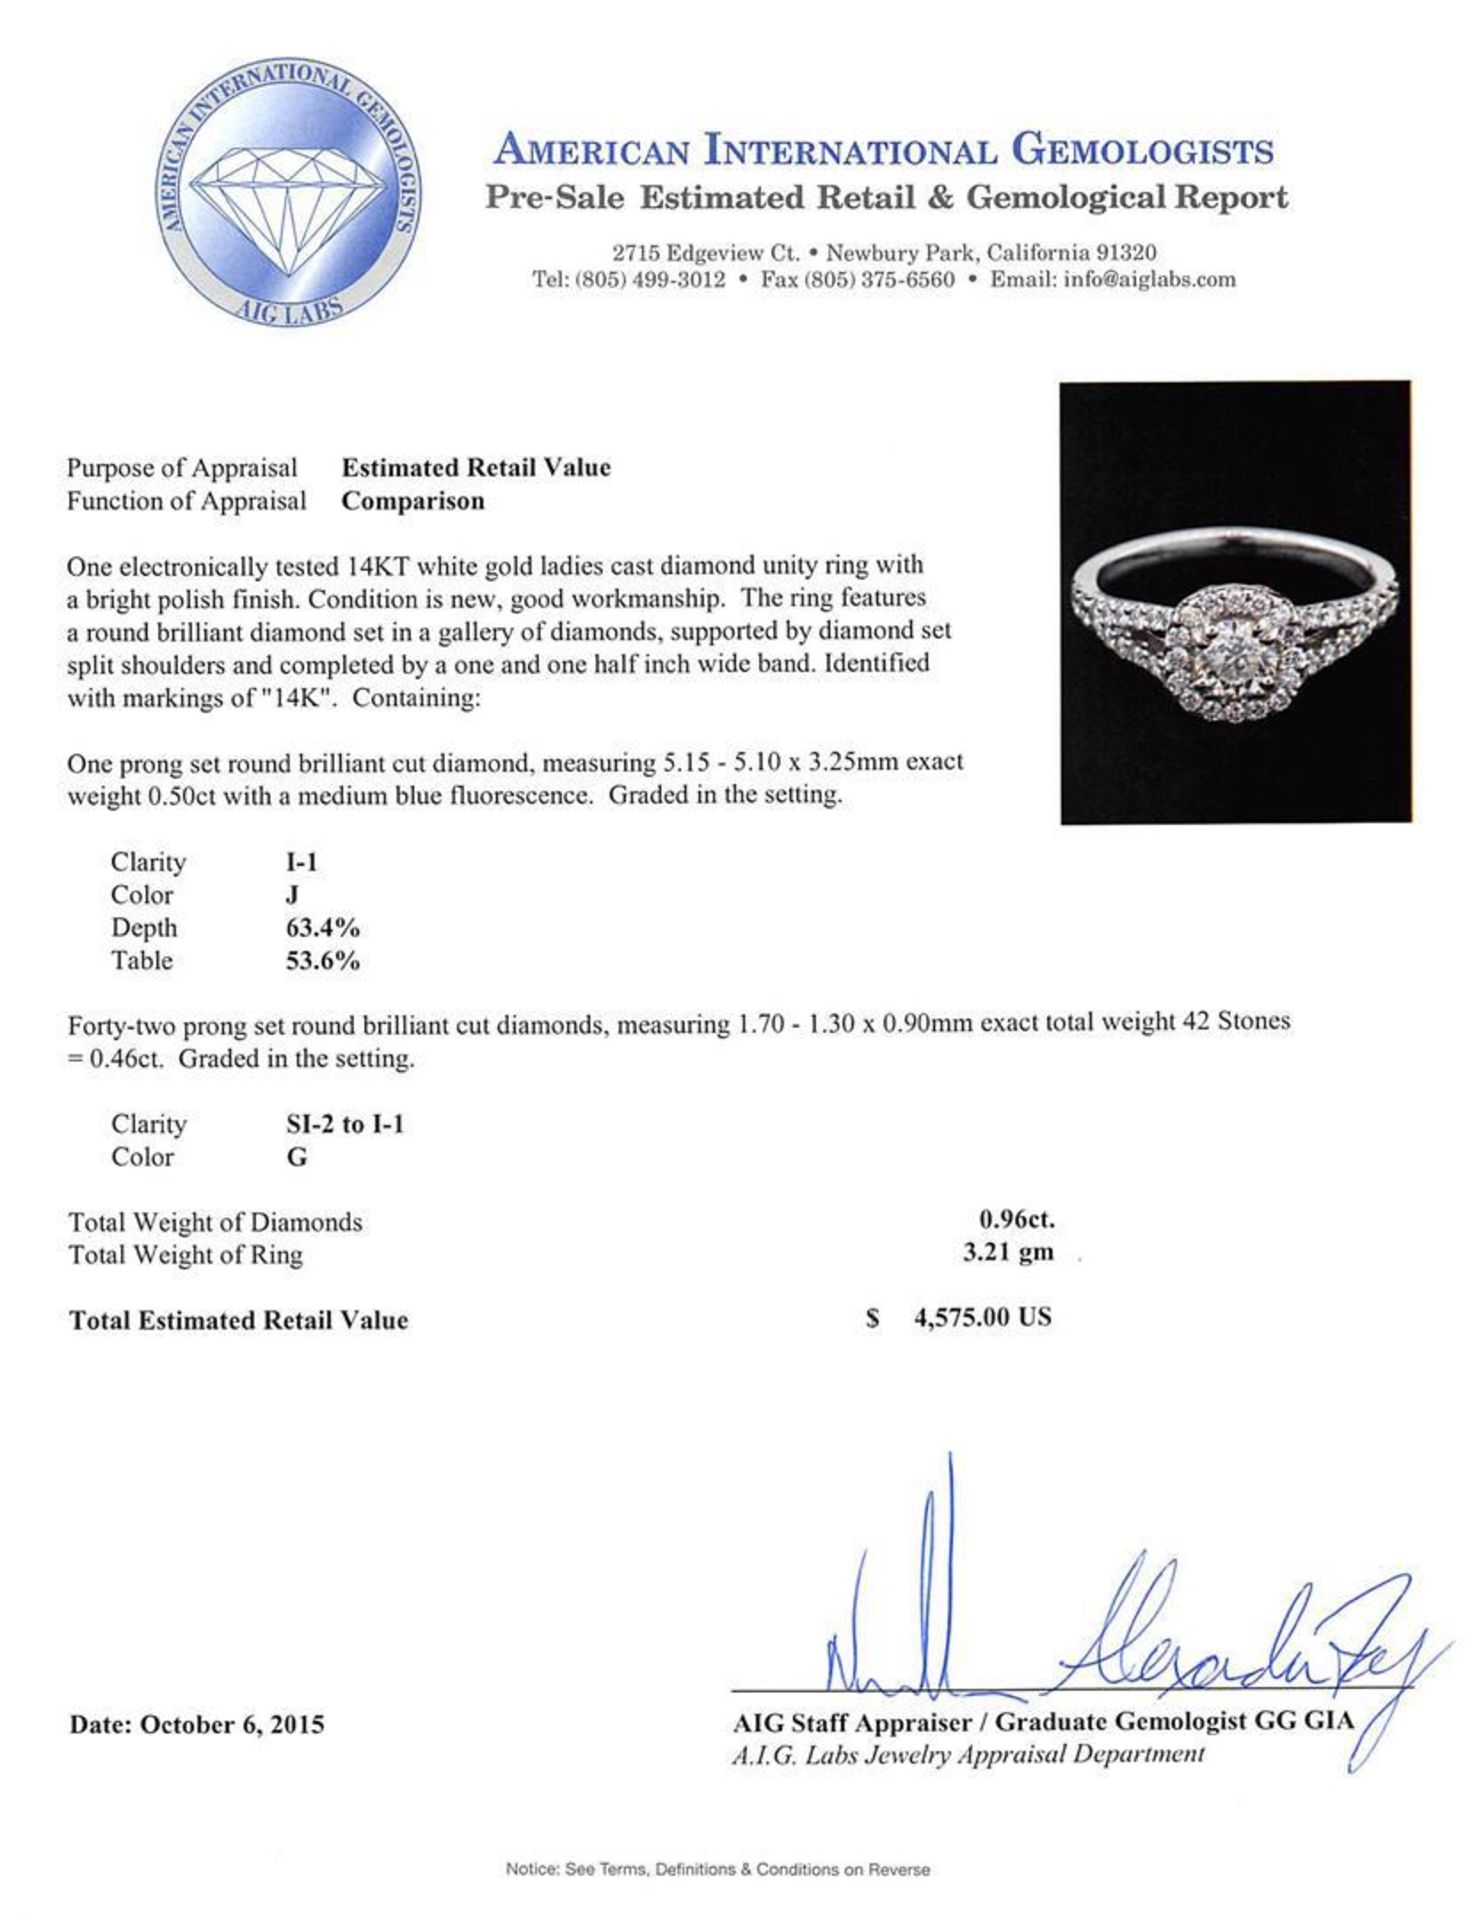 0.96 ctw Diamond Ring - 14KT White Gold - Image 3 of 3